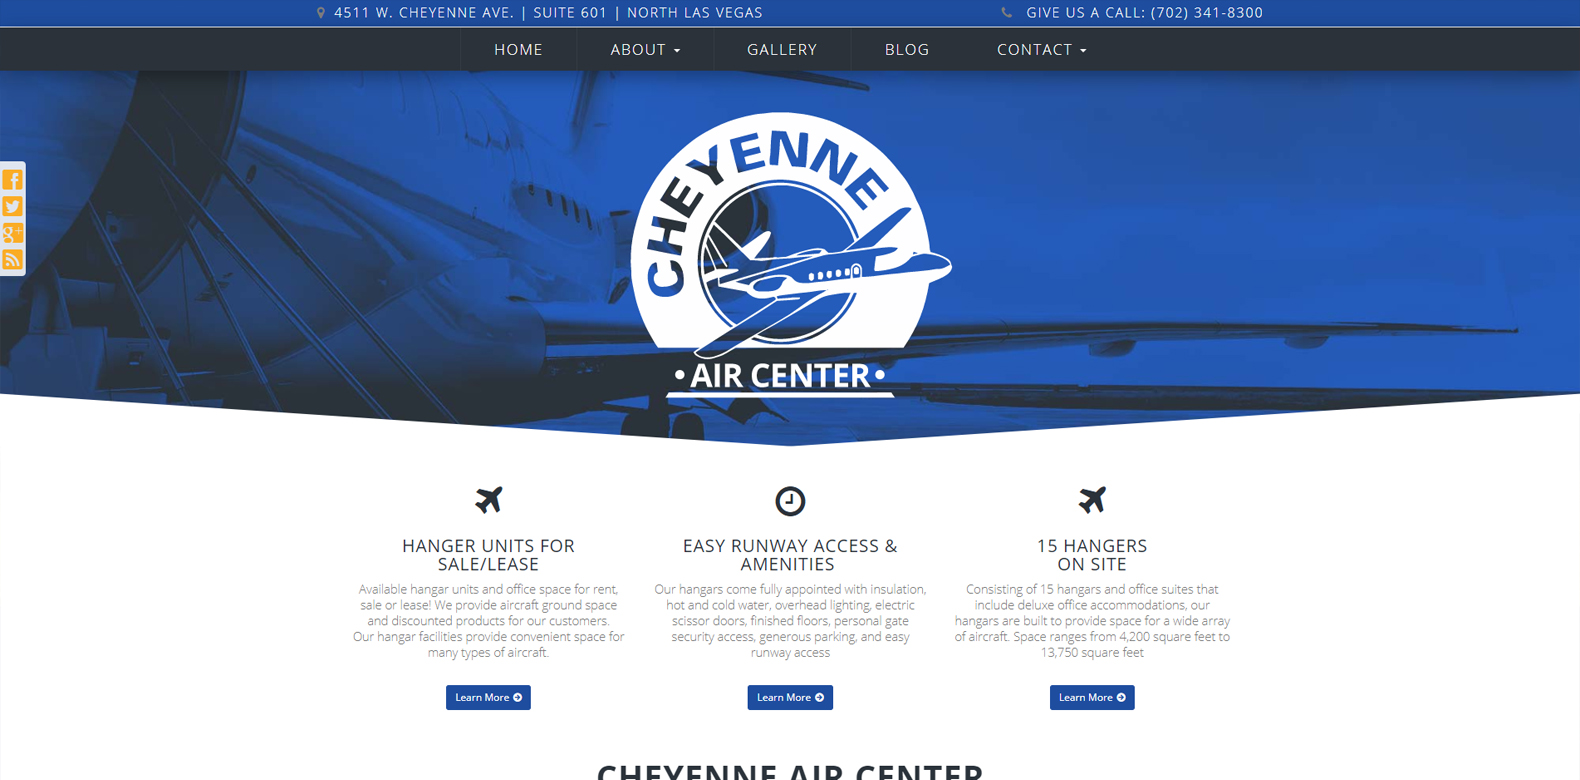 
New Website Launch: Cheyenne Air Center